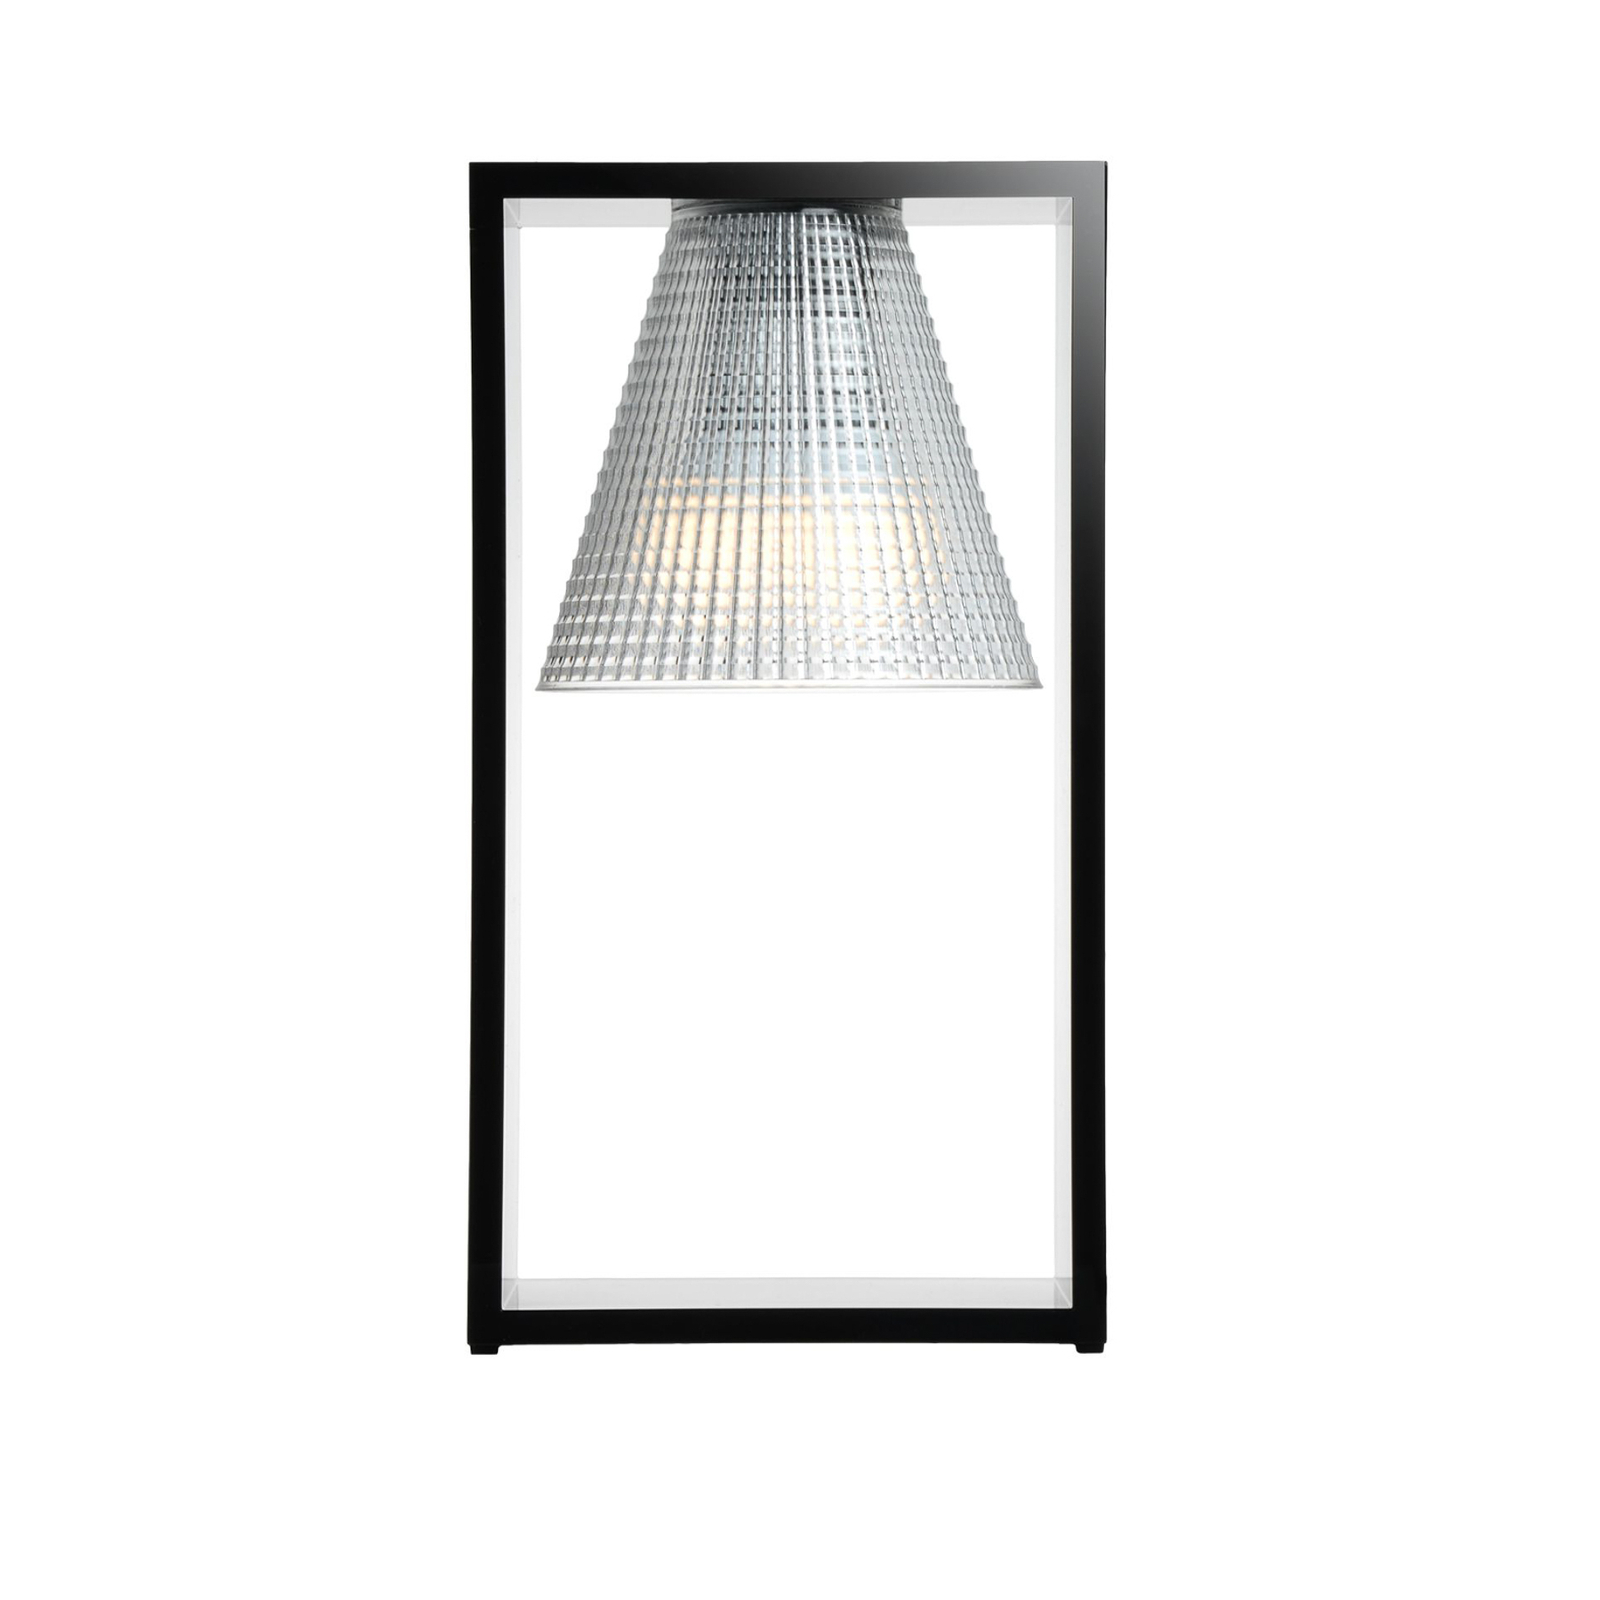 LED design tafellamp Light-Air, zwart-transp.